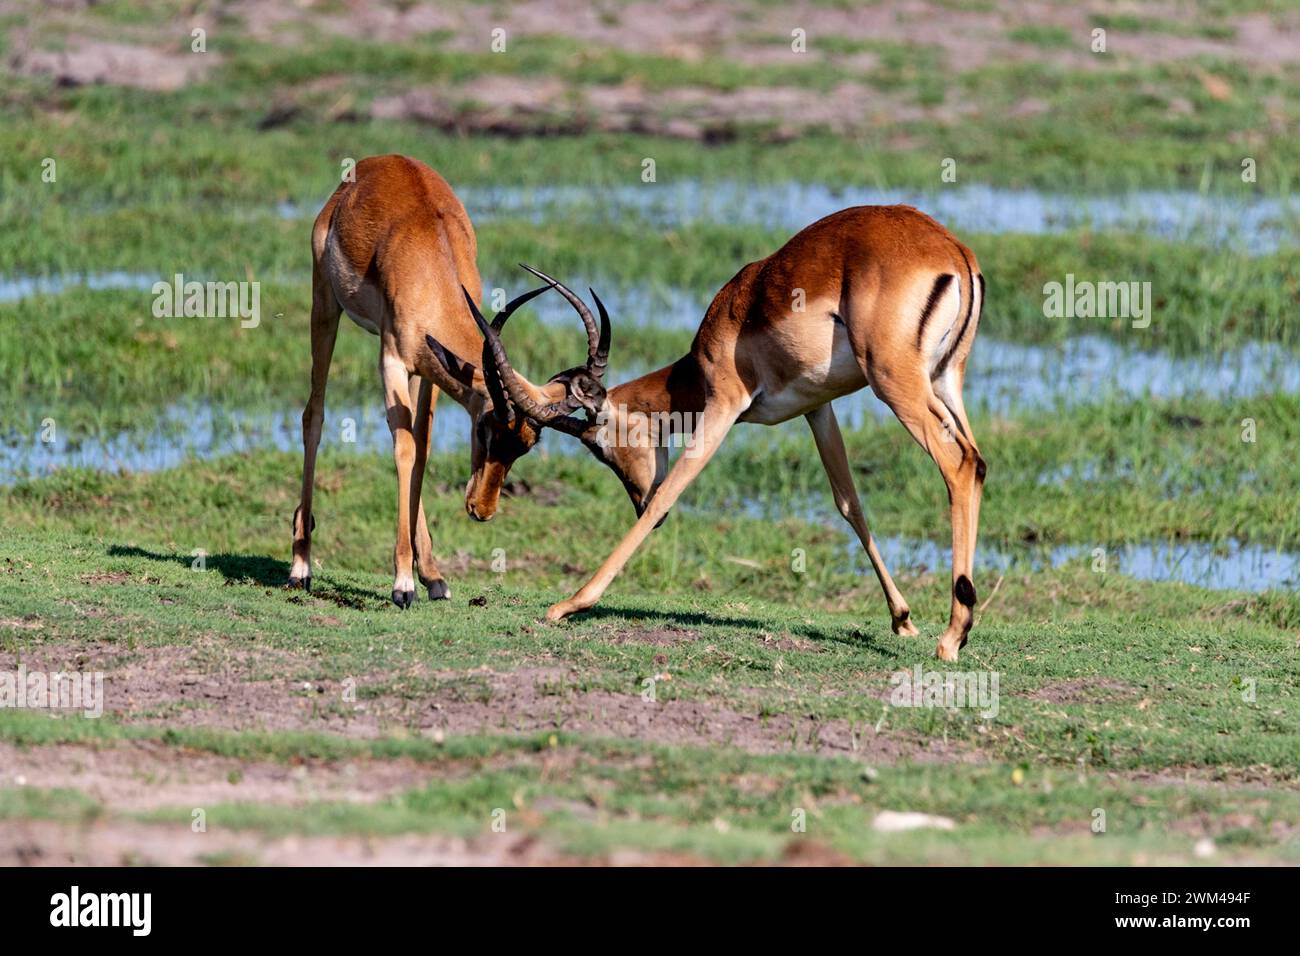 Duelling Impalas, Chobe National Park, Botswana Stock Photo